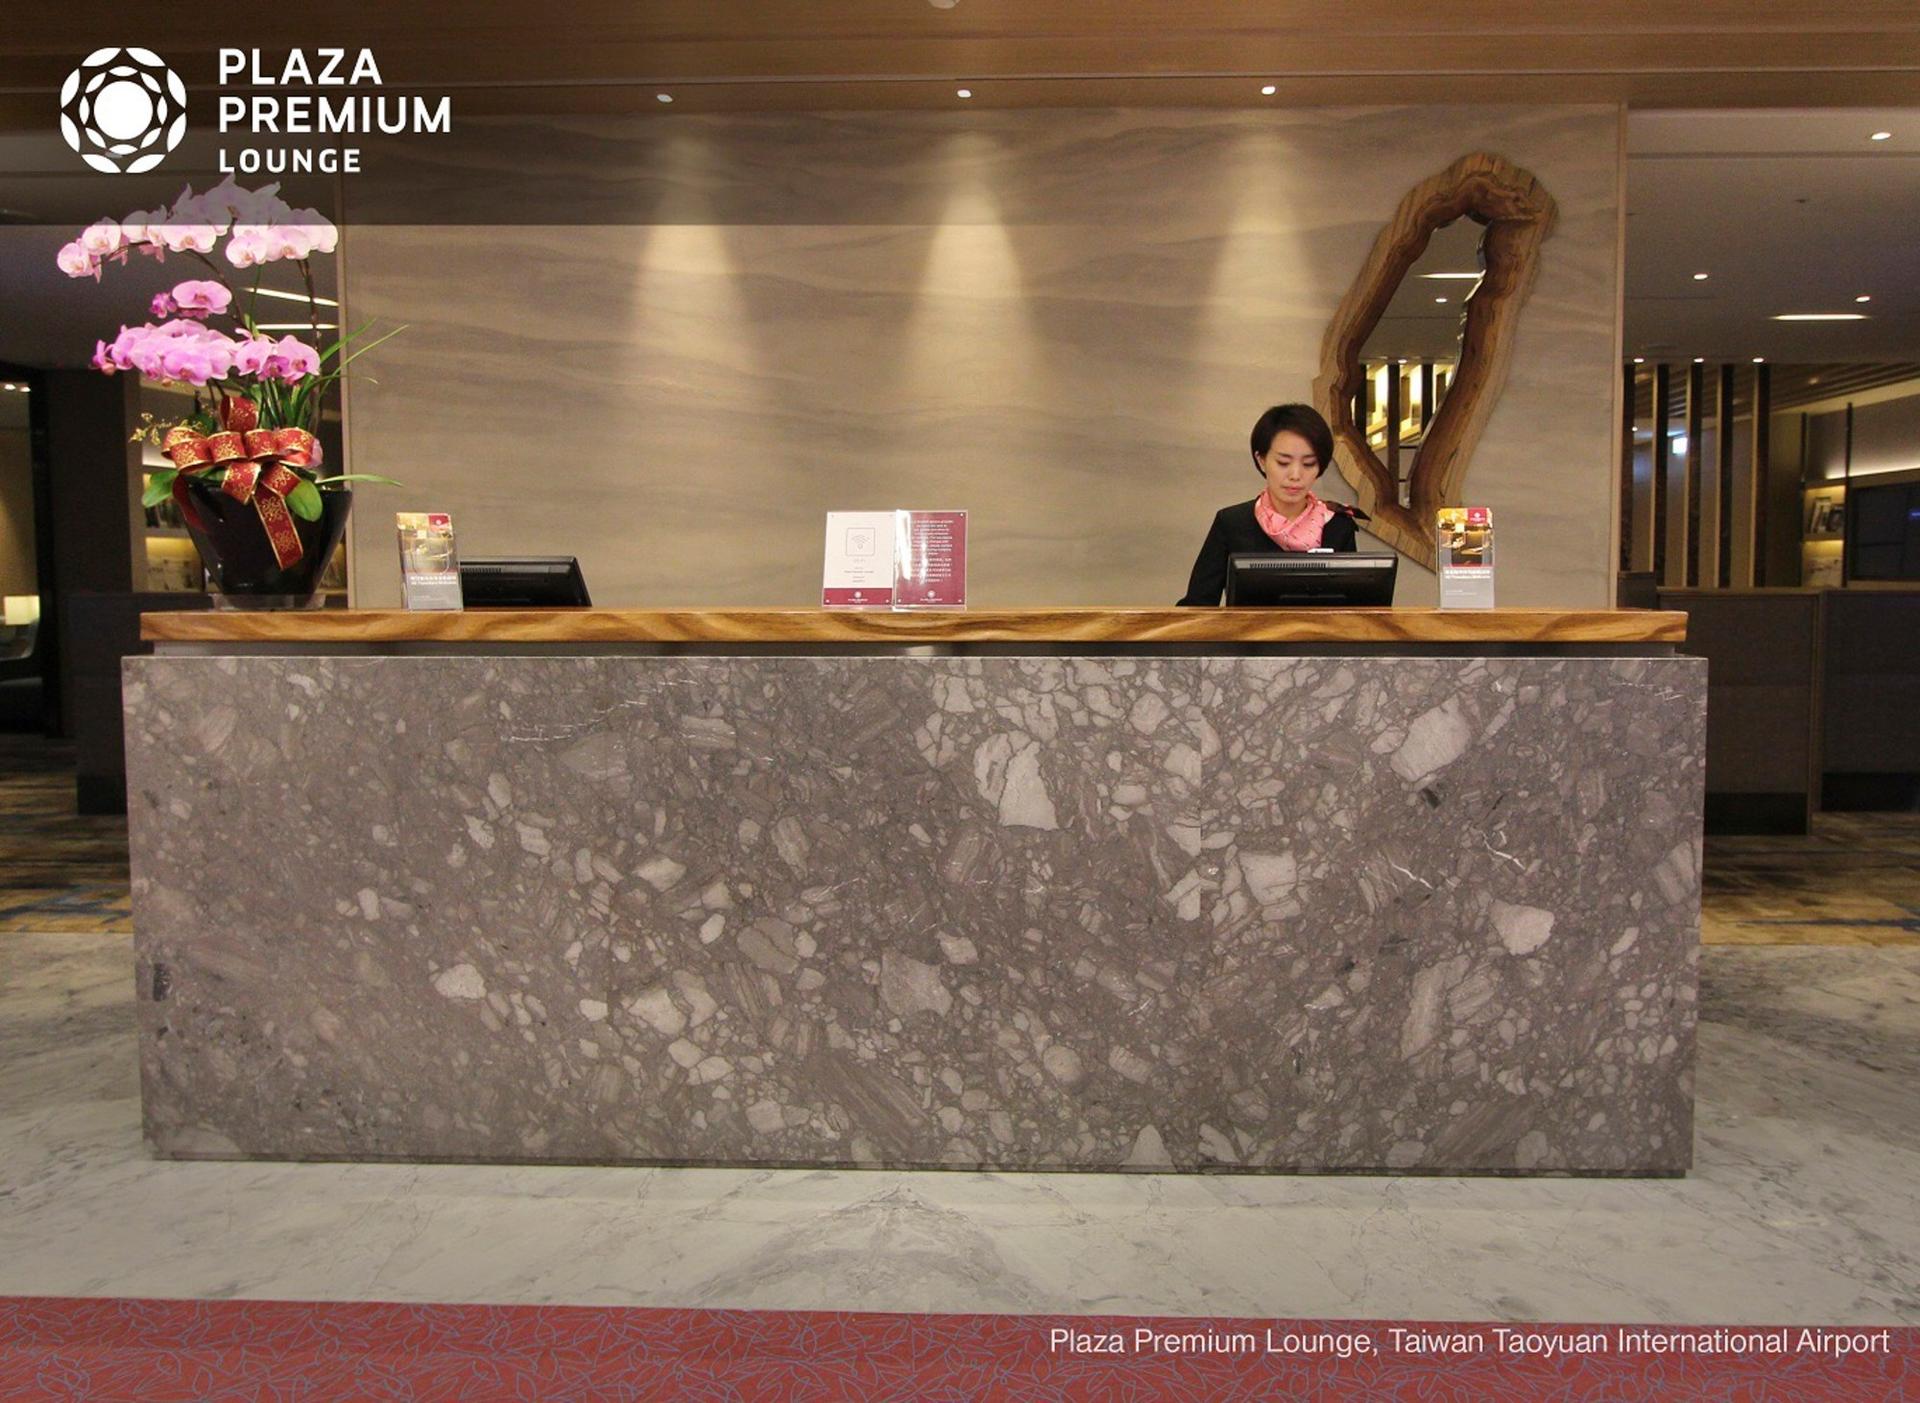 Plaza Premium Lounge (Zone A) image 8 of 79